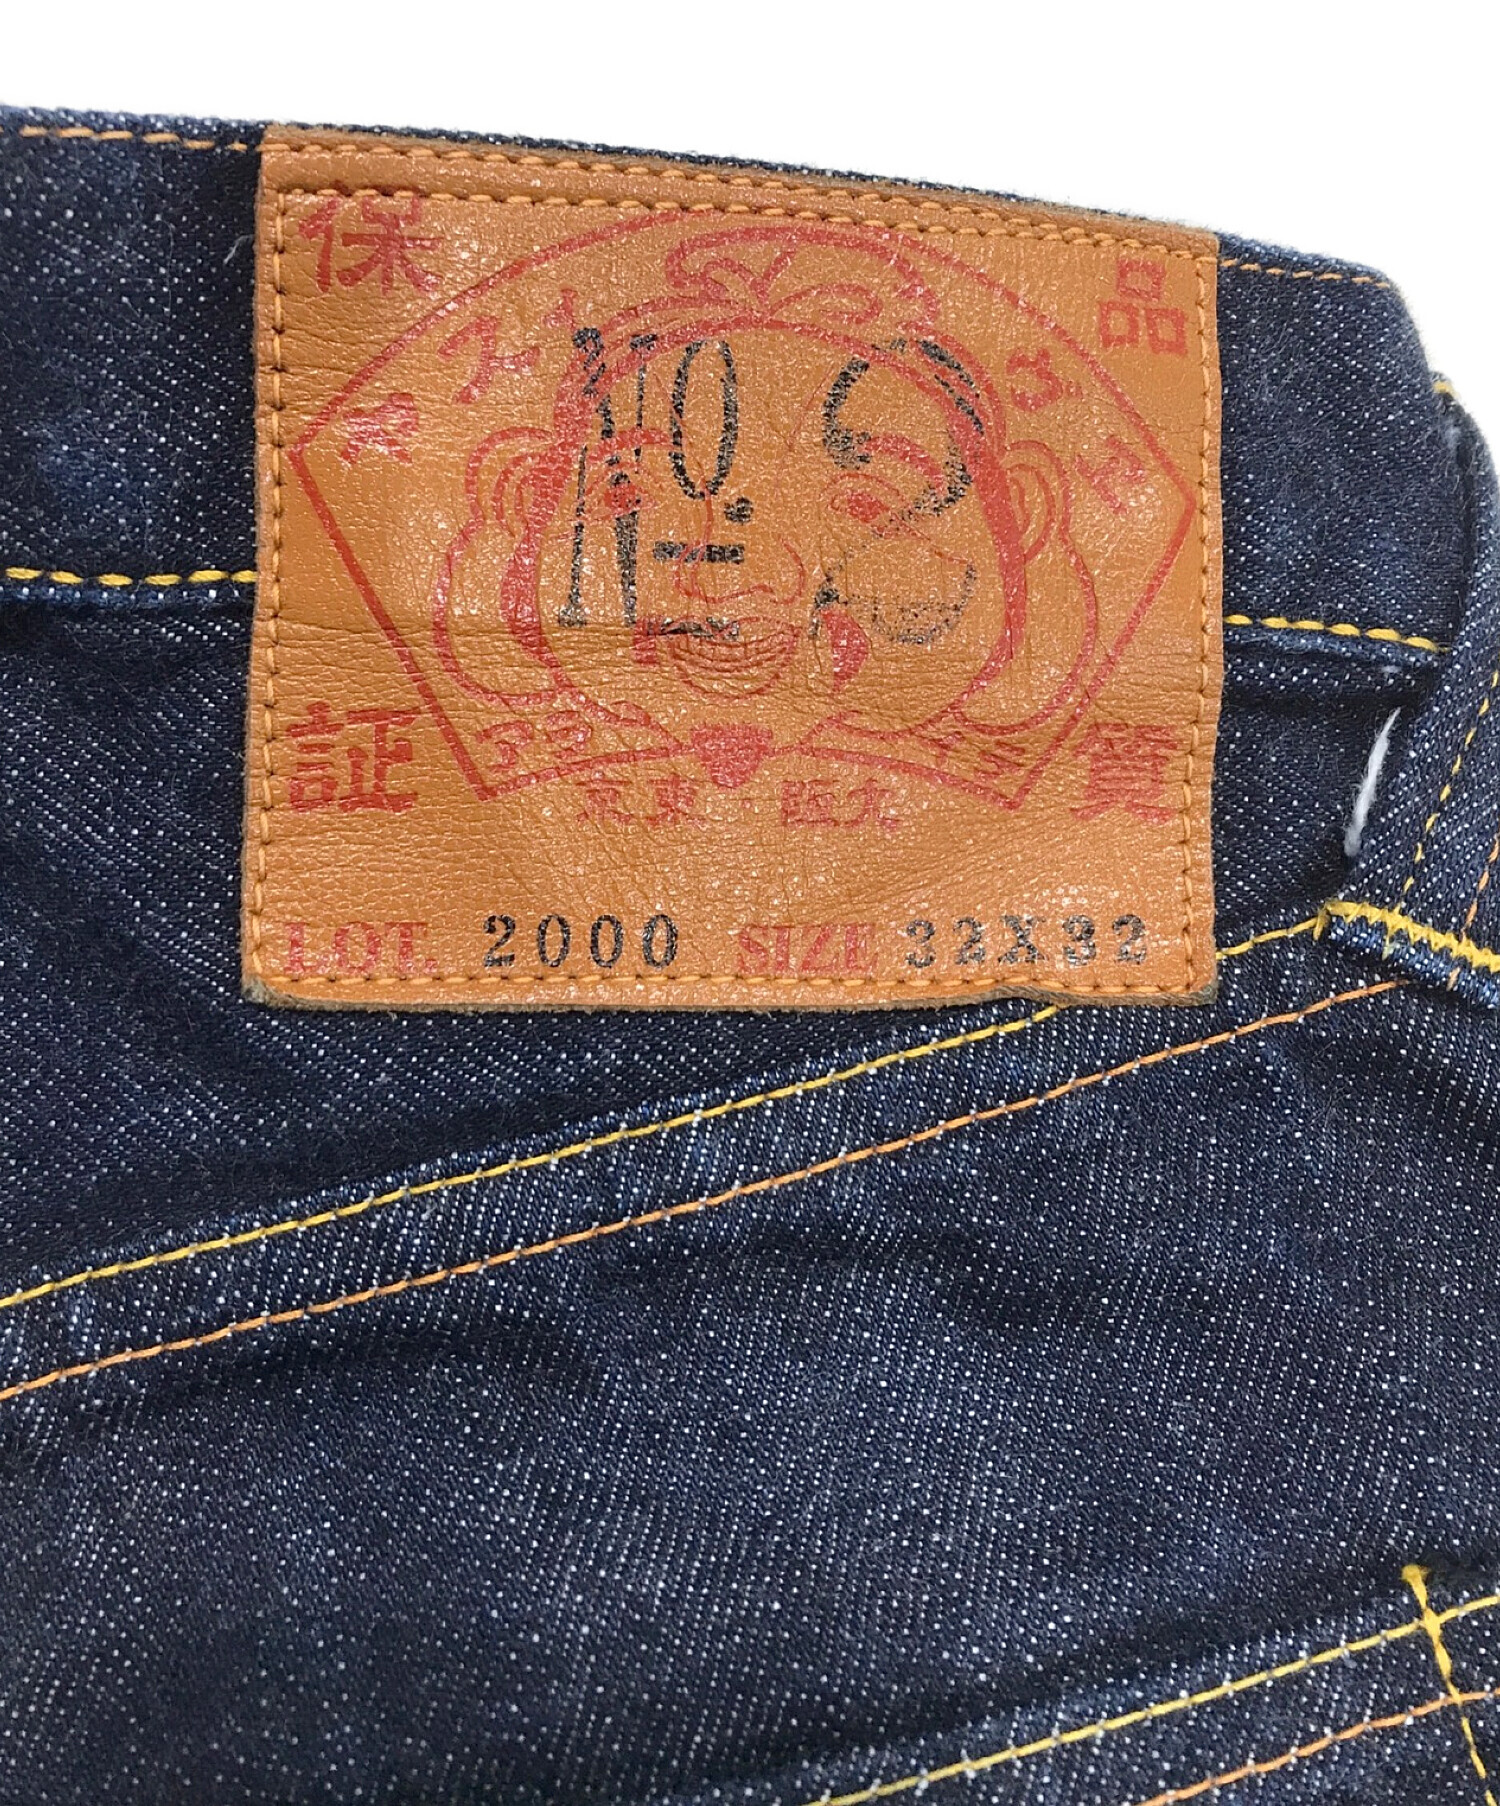 Evisu Jeans (エヴィスジーンズ) Lot.2000 No.2 DENIM REGULAR STRAIGHT デニムパンツ インディゴ  サイズ:W32